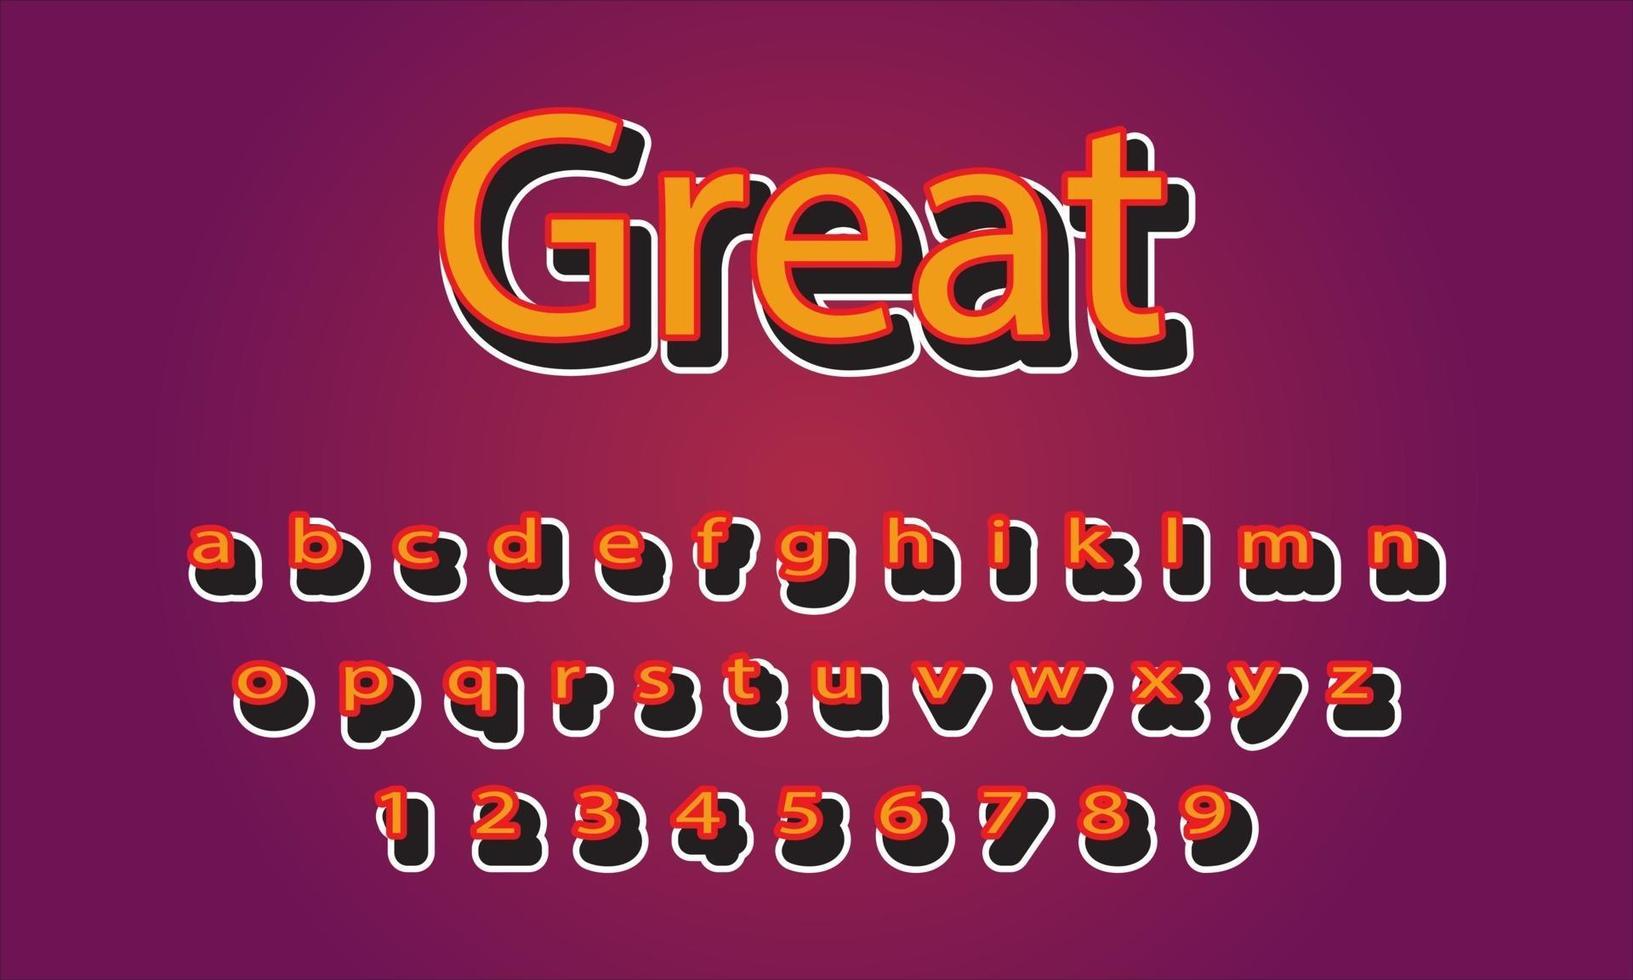 Great text alphabet vector